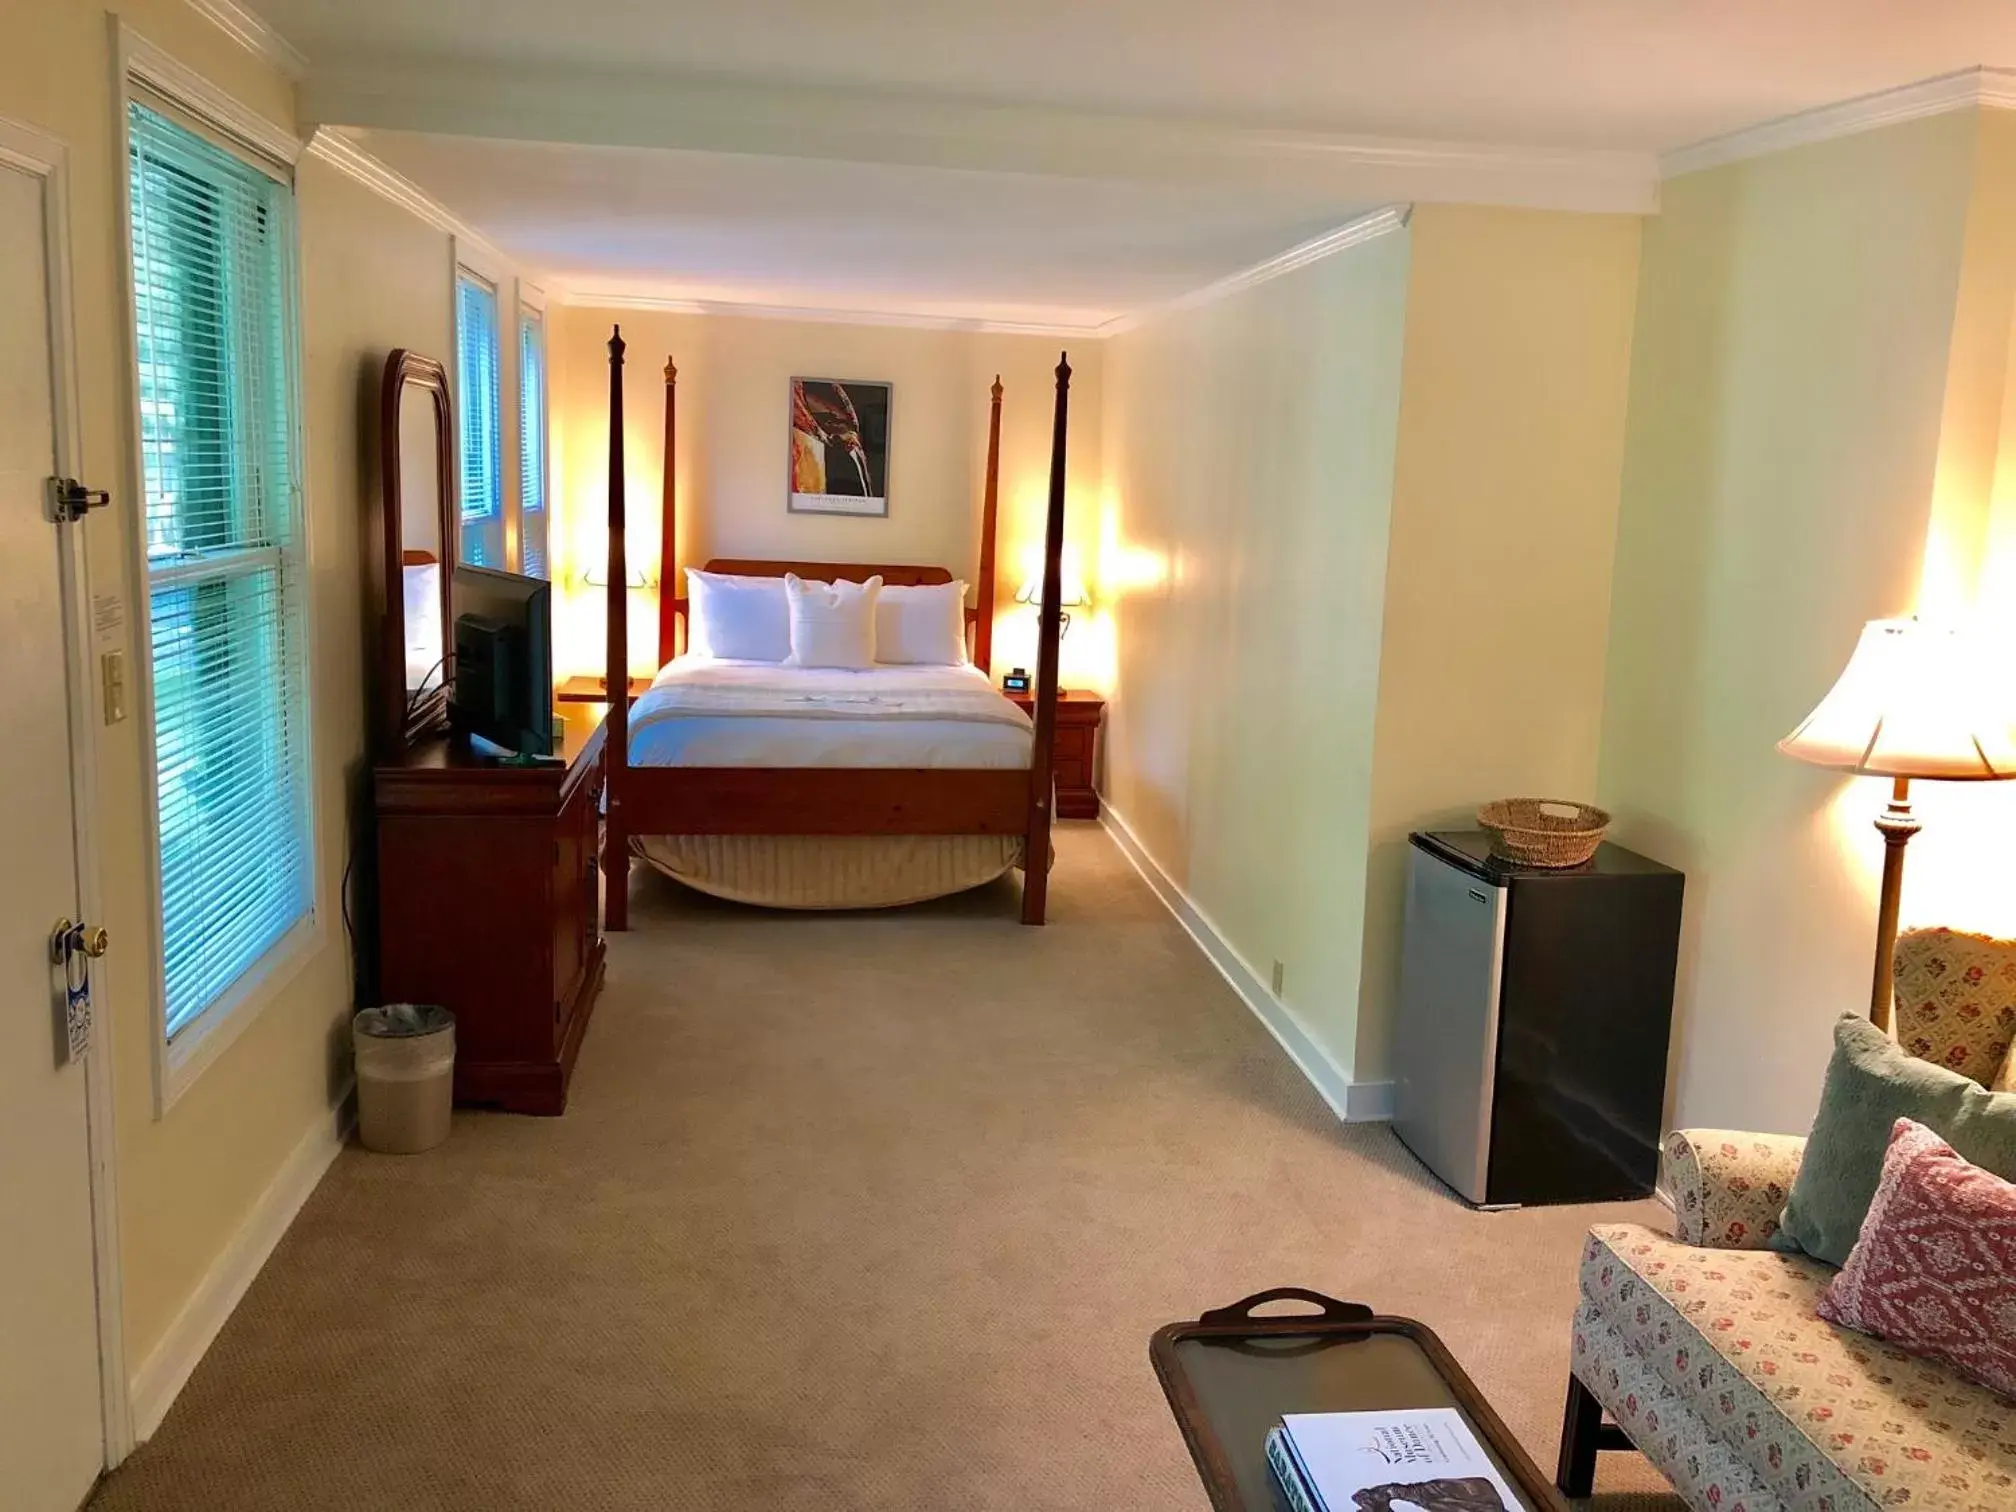 Deluxe Queen Room in Anne's Washington Inn